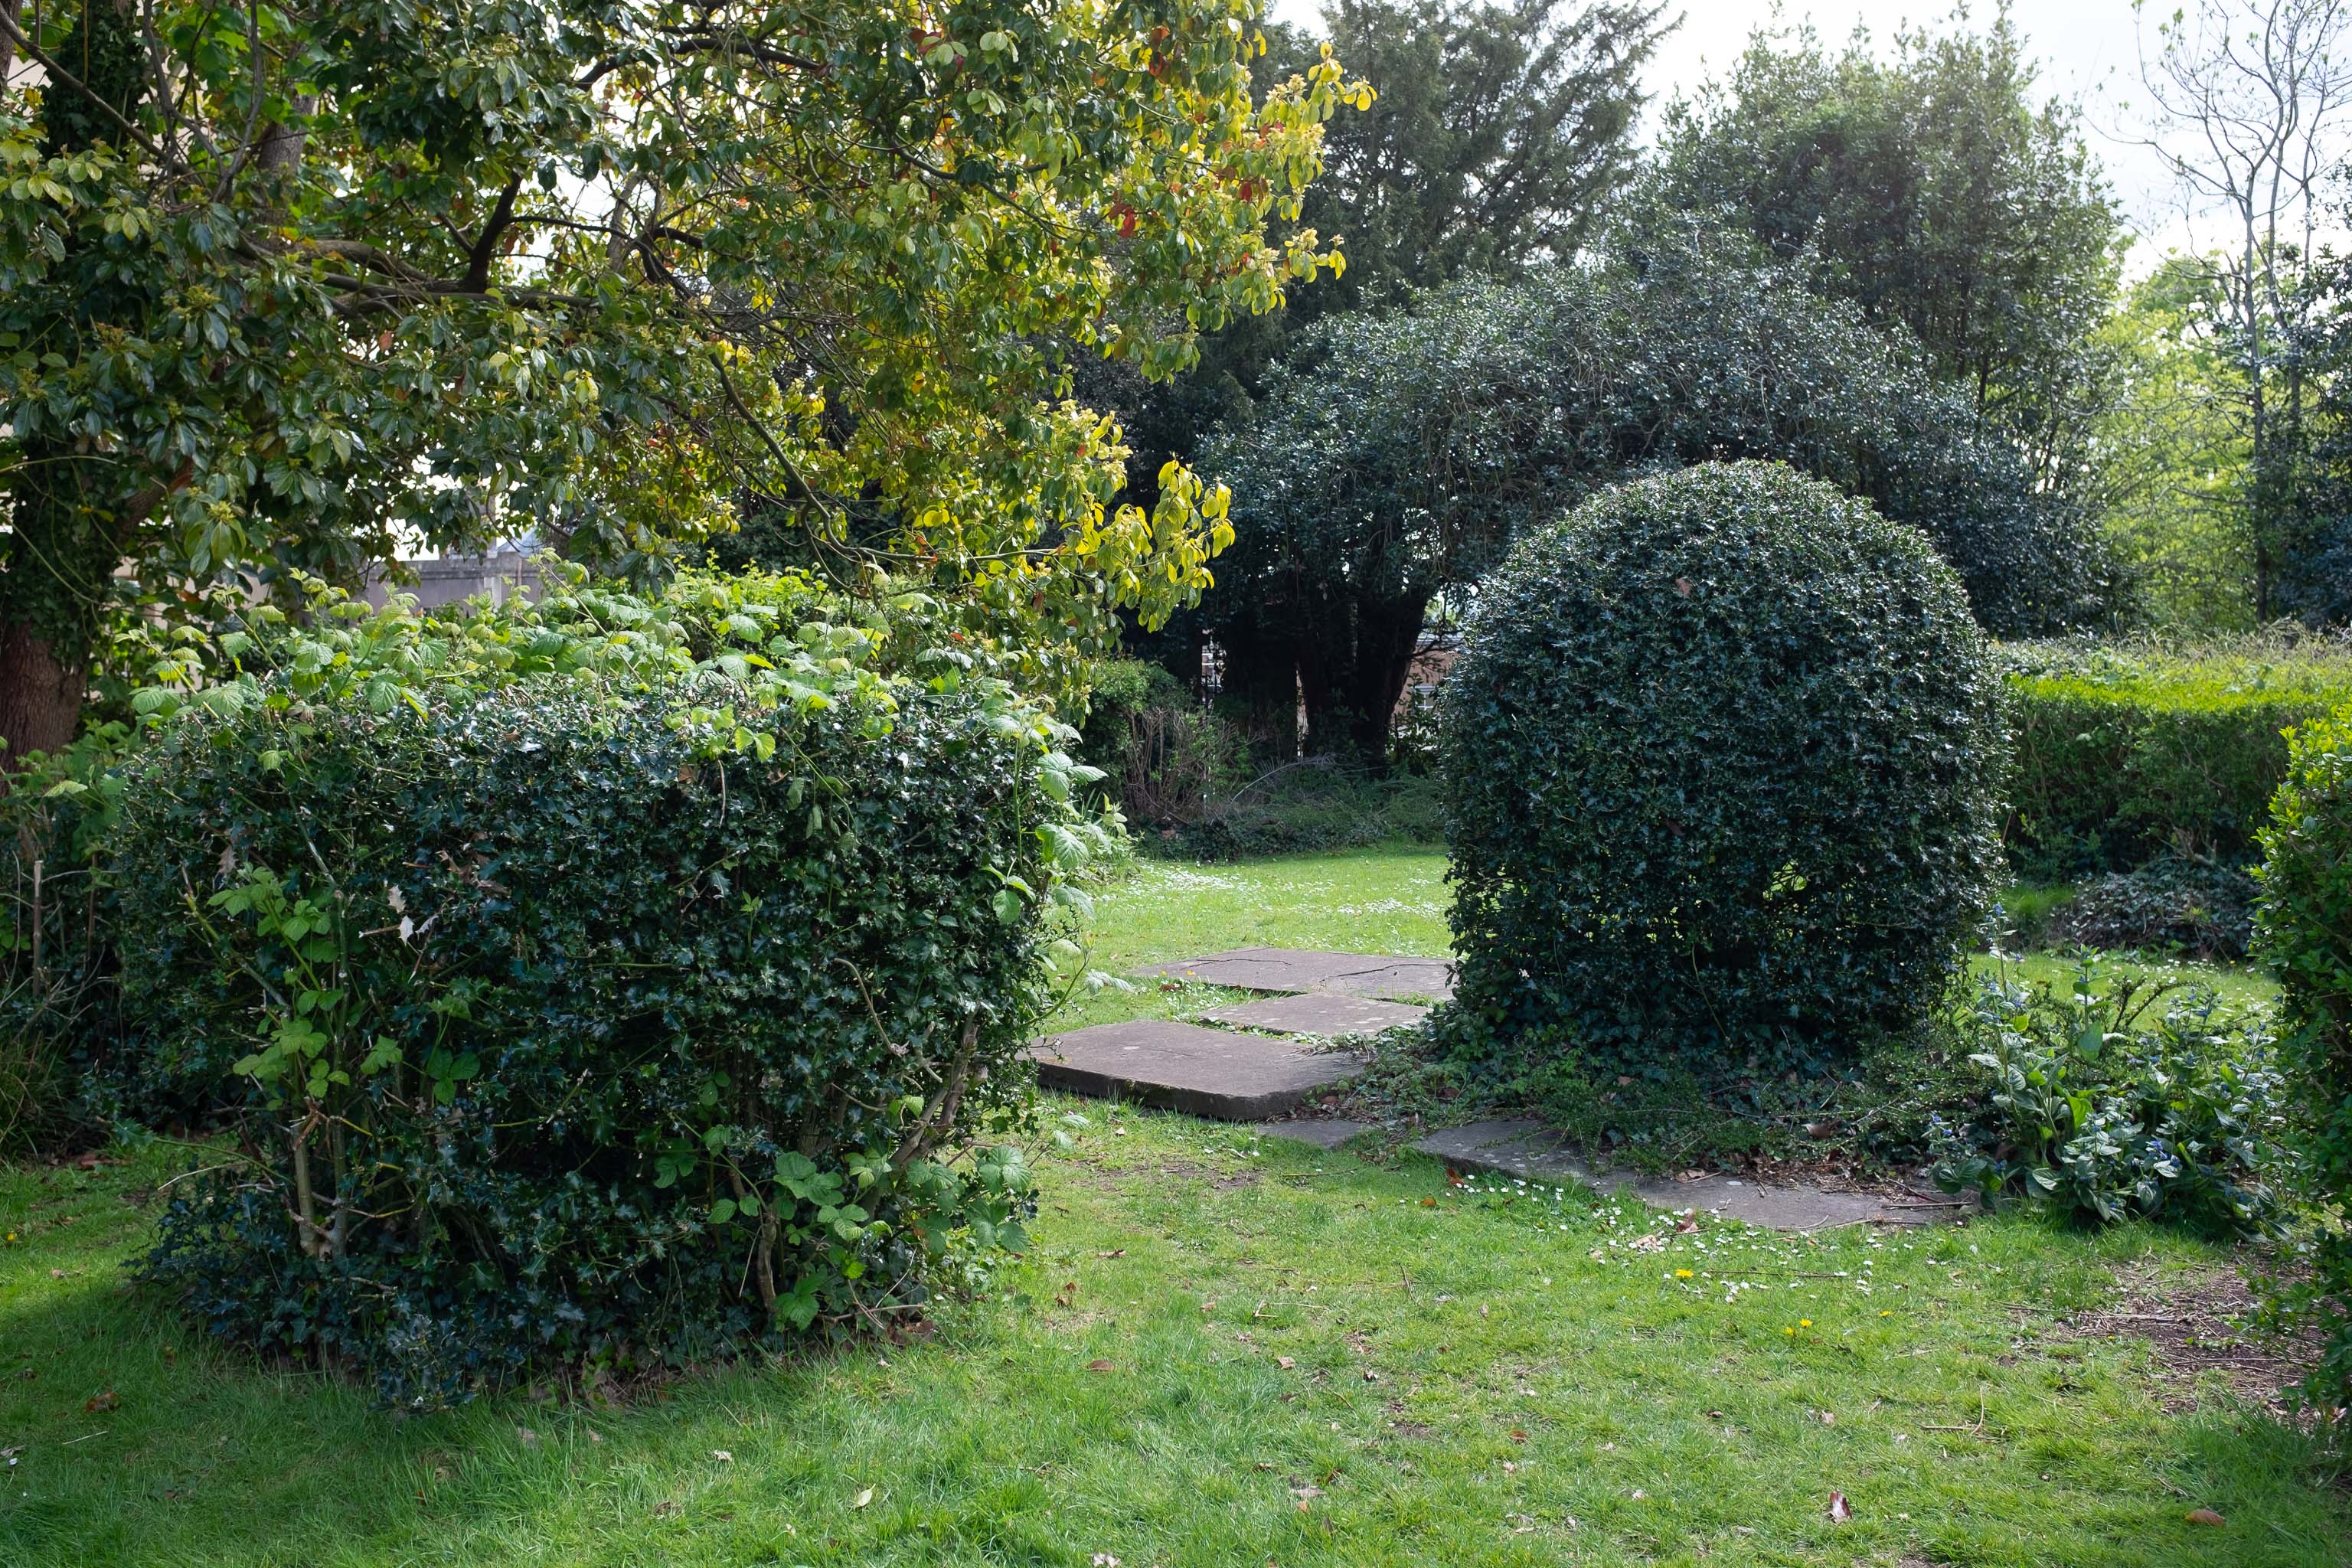 Topiary and Gravestones
